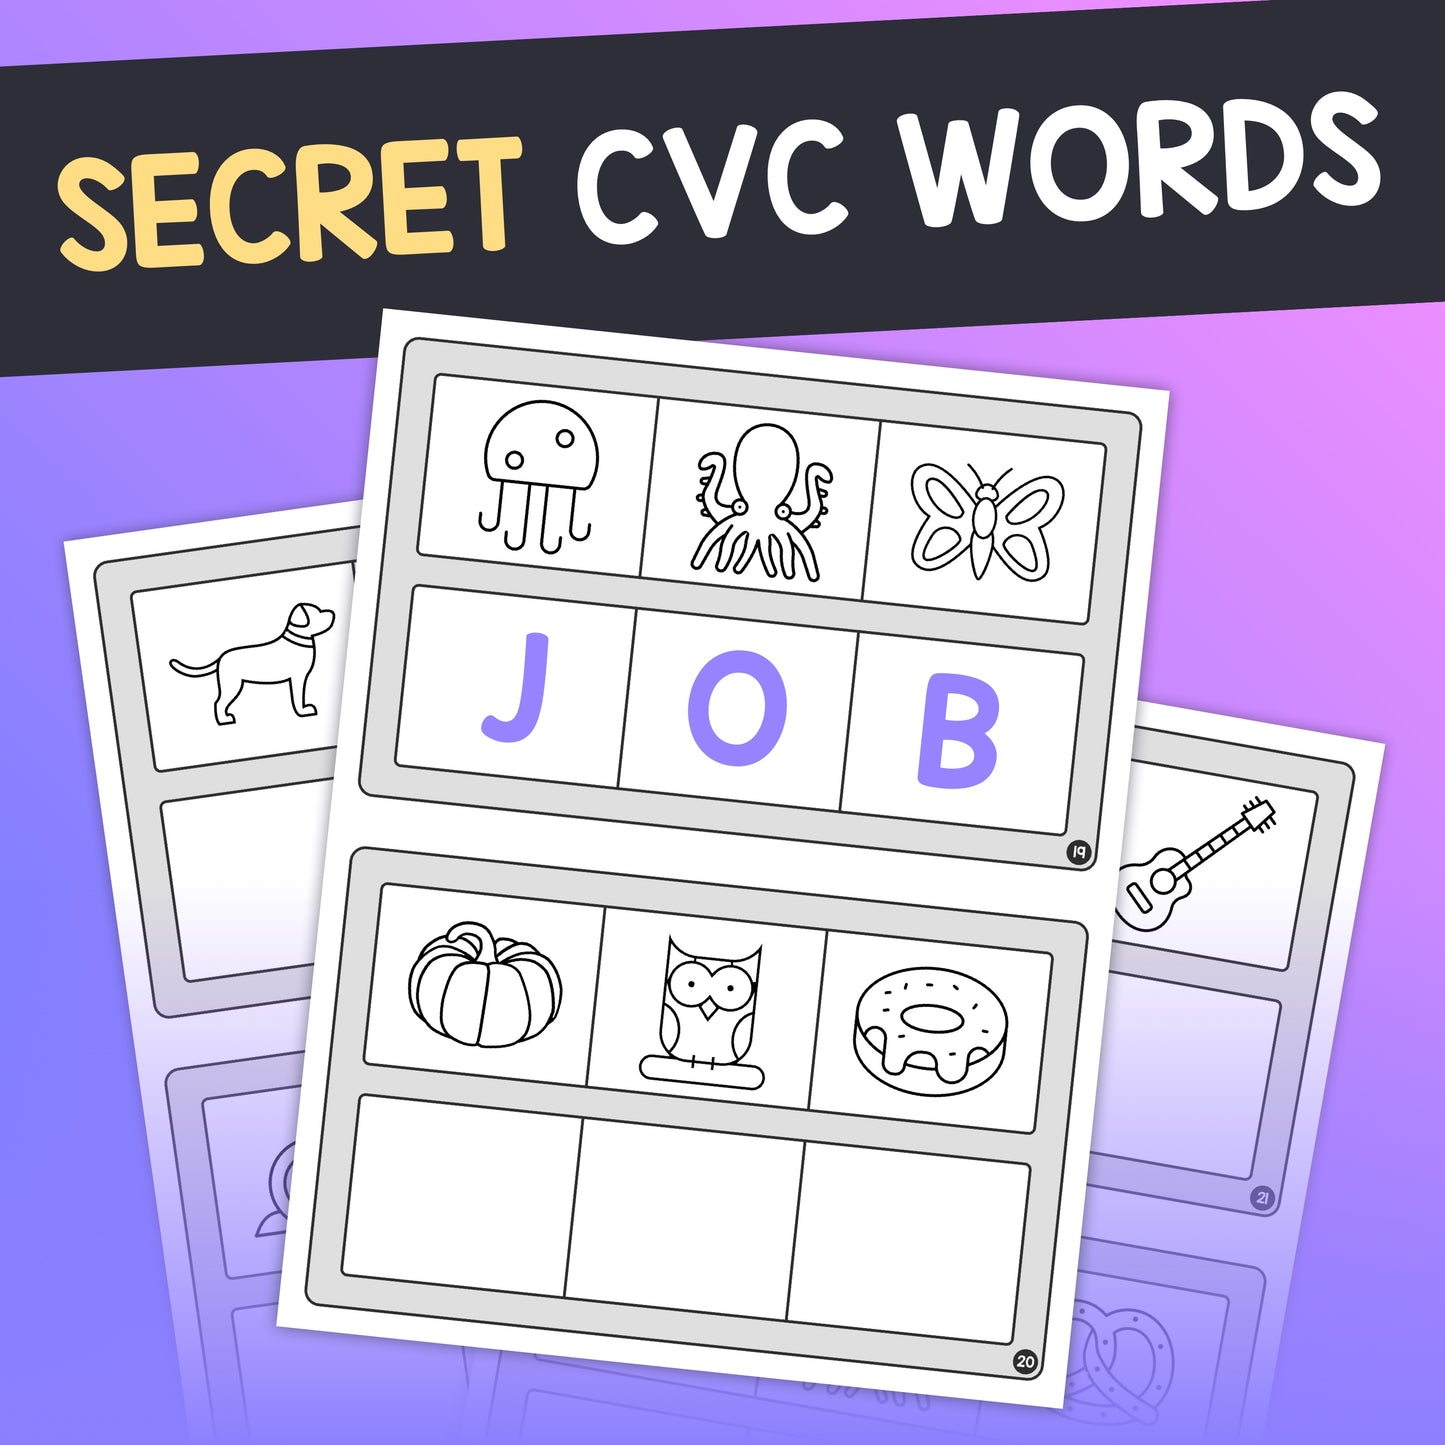 Secret CVC Words Activity